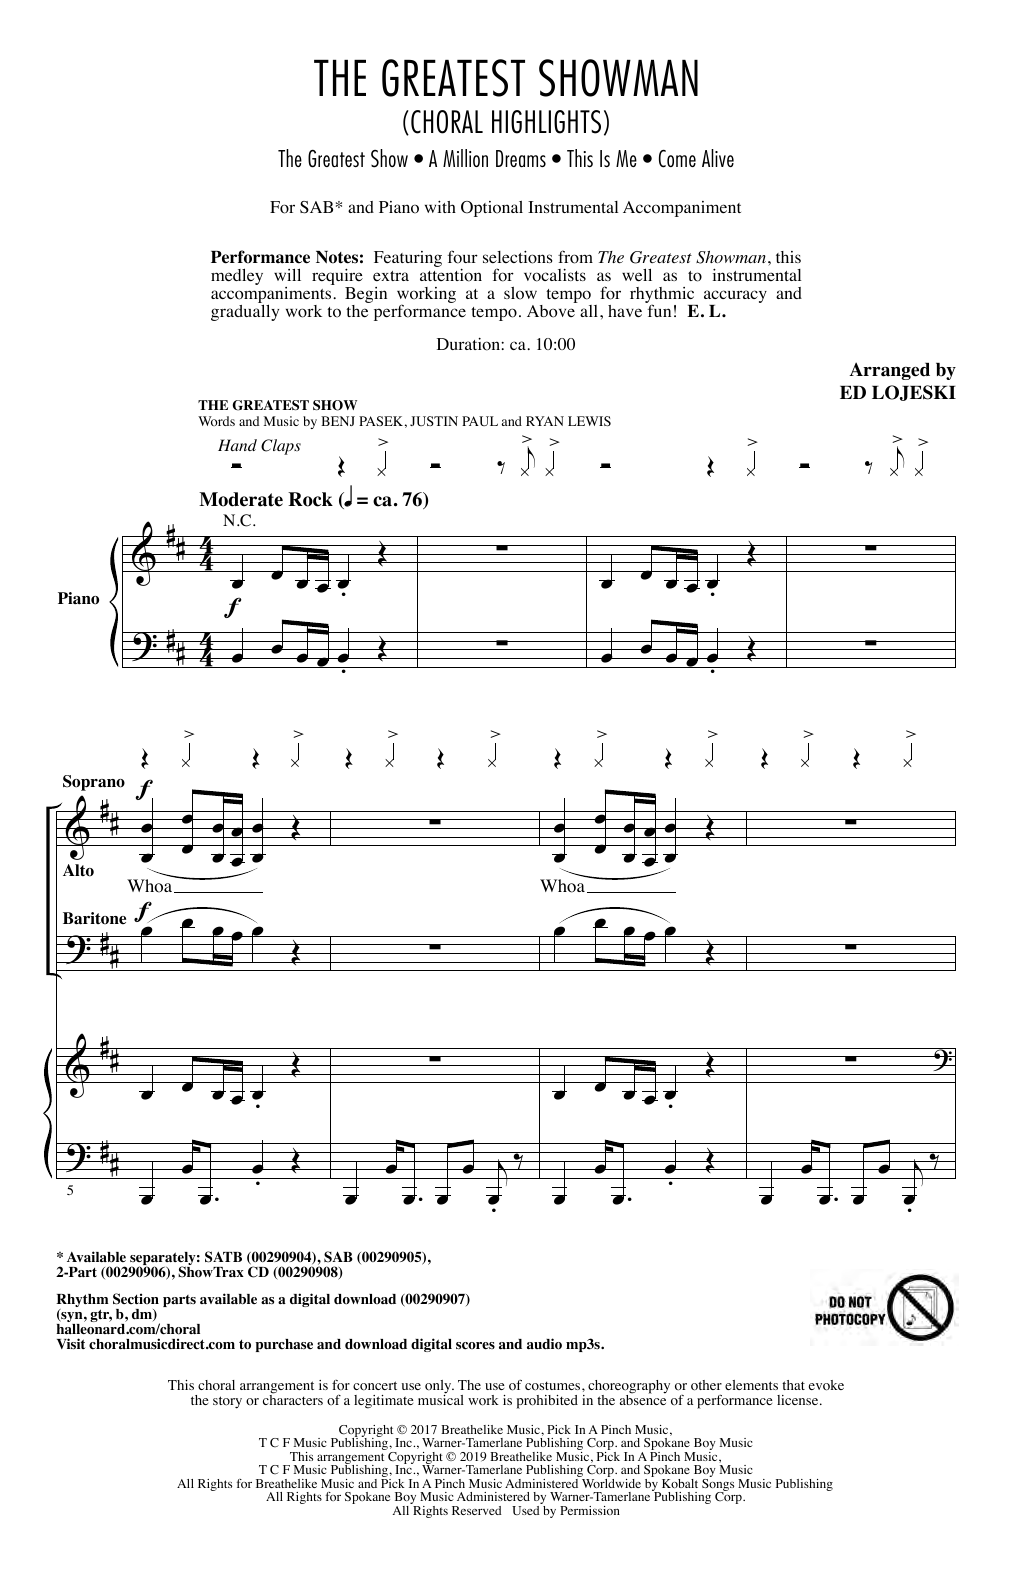 Pasek & Paul The Greatest Showman (Choral Highlights) (arr. Ed Lojeski) sheet music notes and chords arranged for SATB Choir